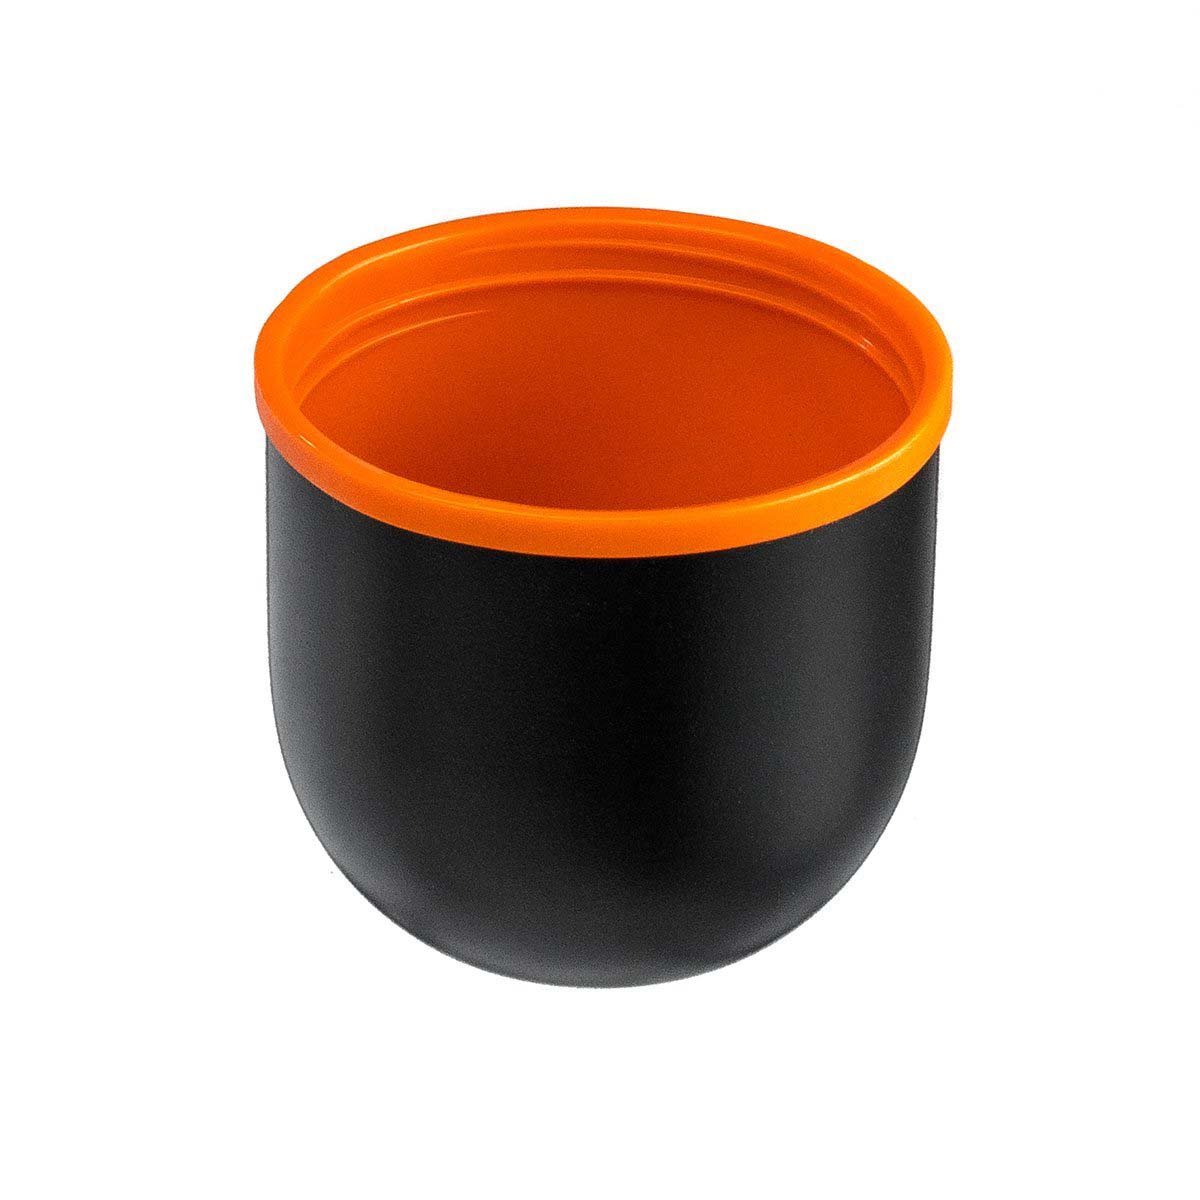 A black lid cup